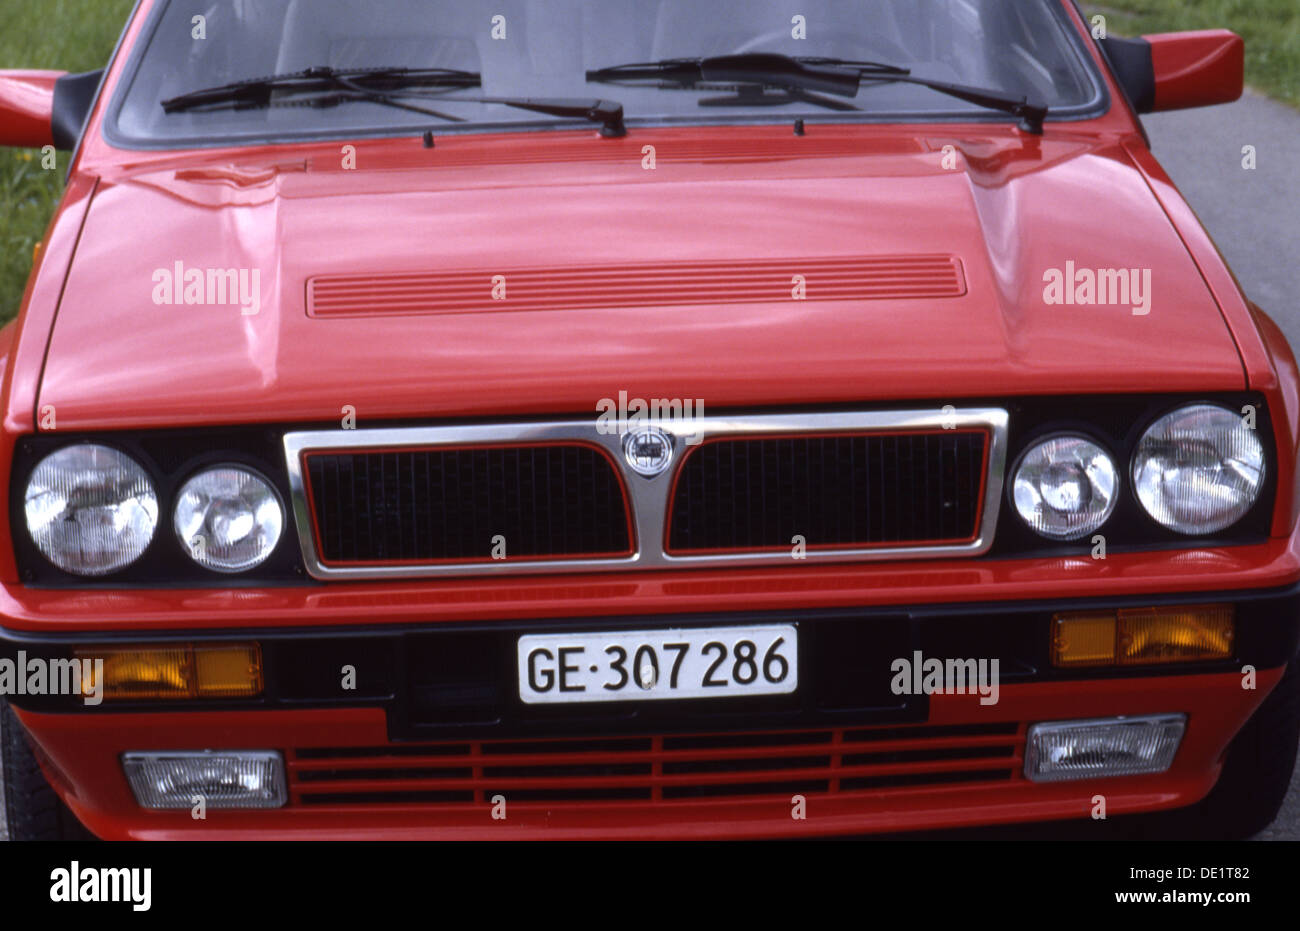 Lancia Delta Integrale Sports Car 4x4 4WD 1990s Stock Photo